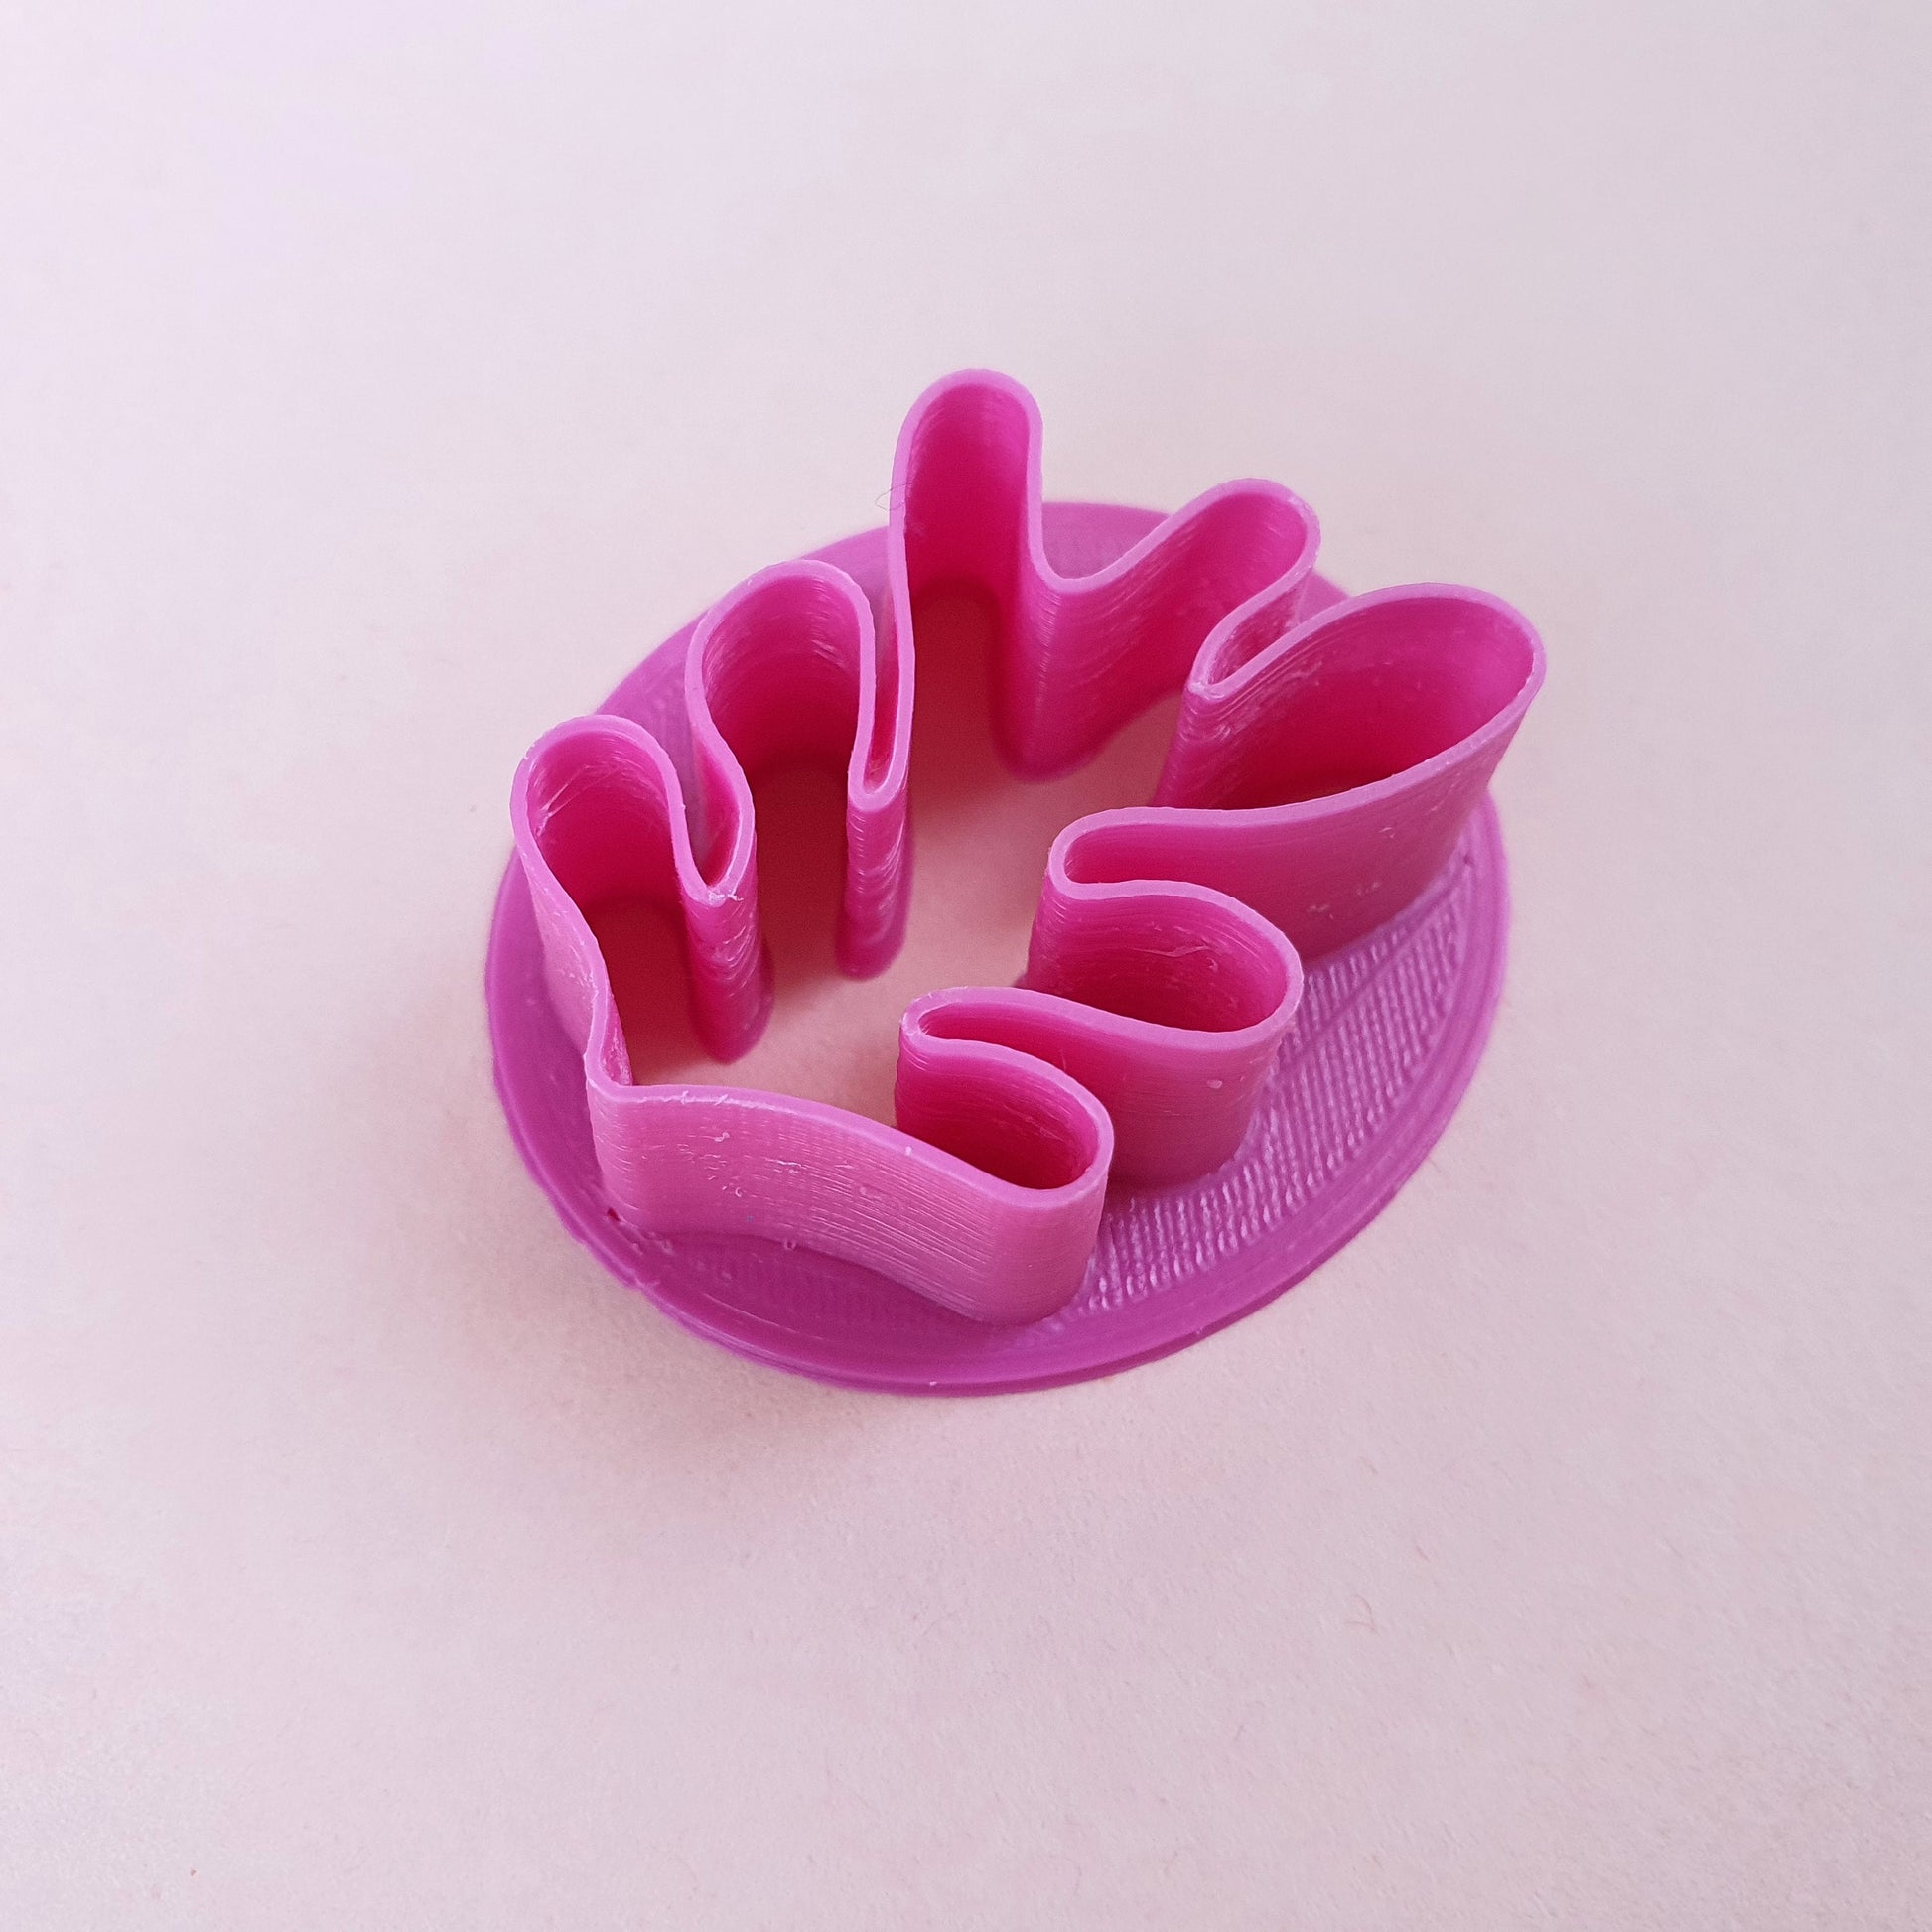 Polymer clay cutter 3D print cutters Jewelry Earrings "Coral" shape plastic cutter - Luxy Kraft